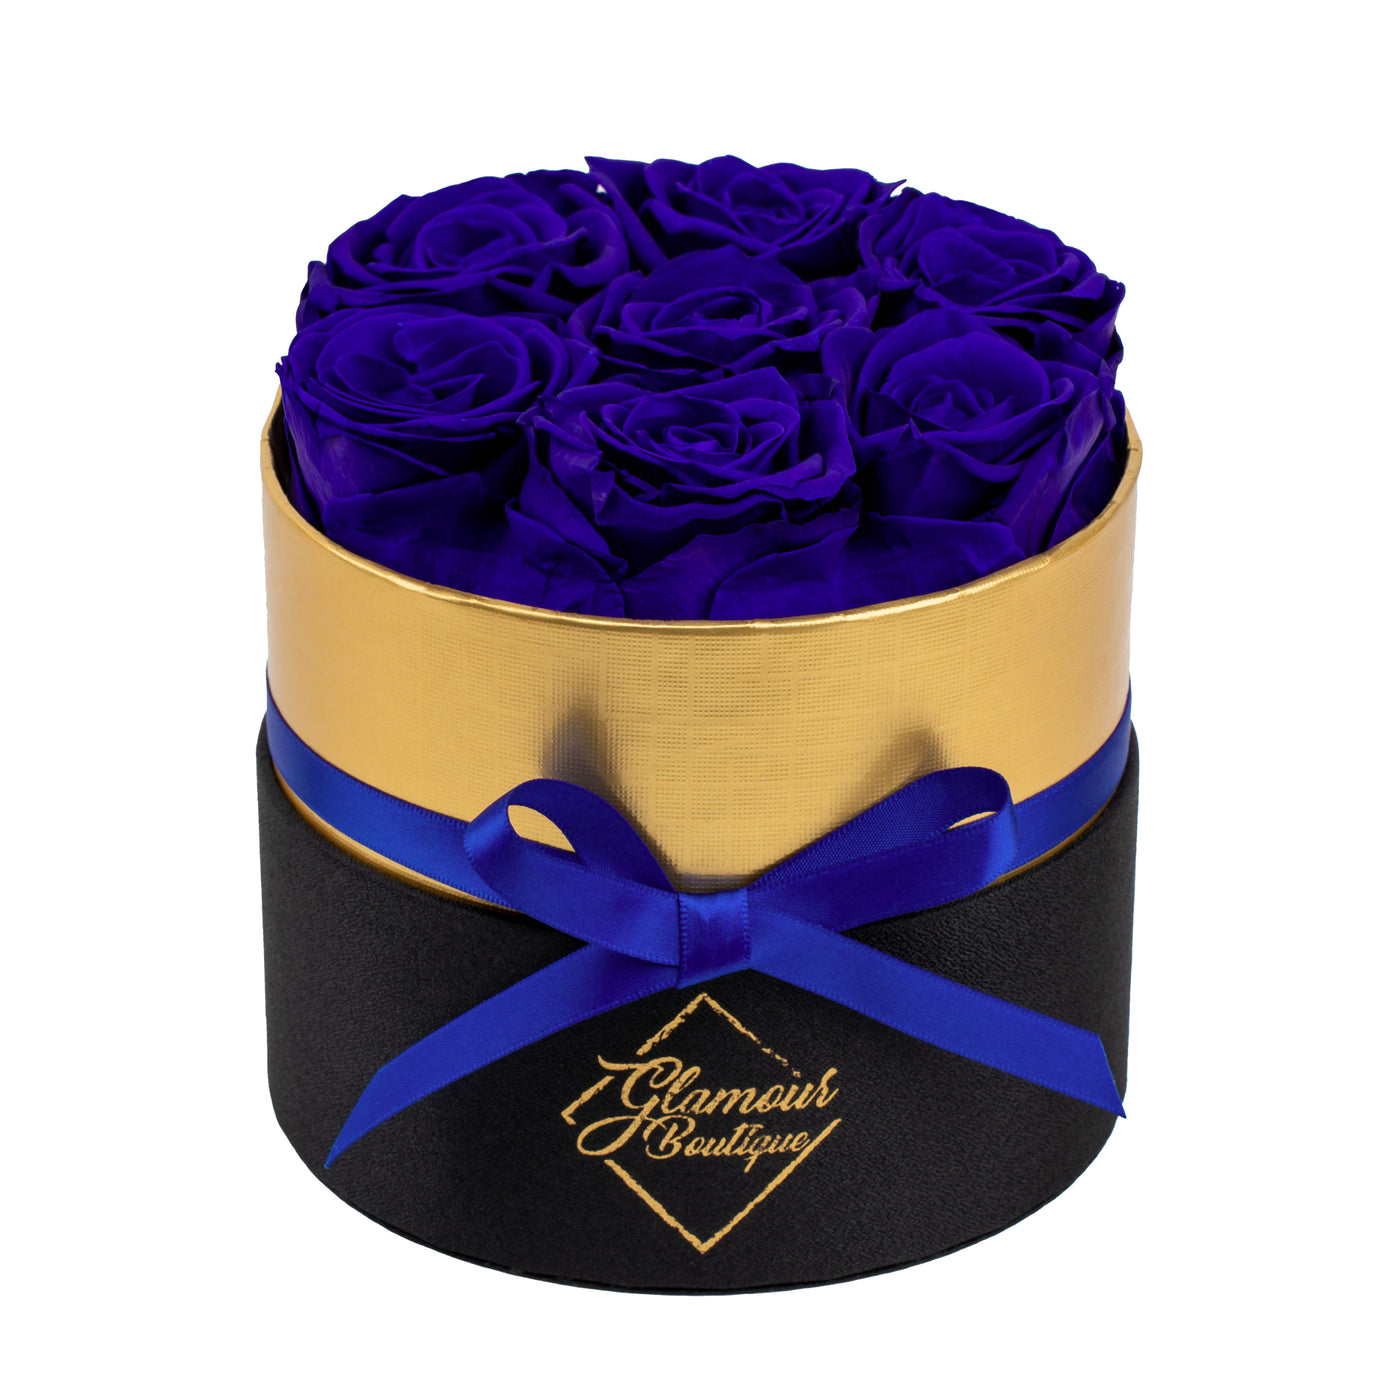 Lasting Beauty Round Black Gold Box |7 Purple Roses